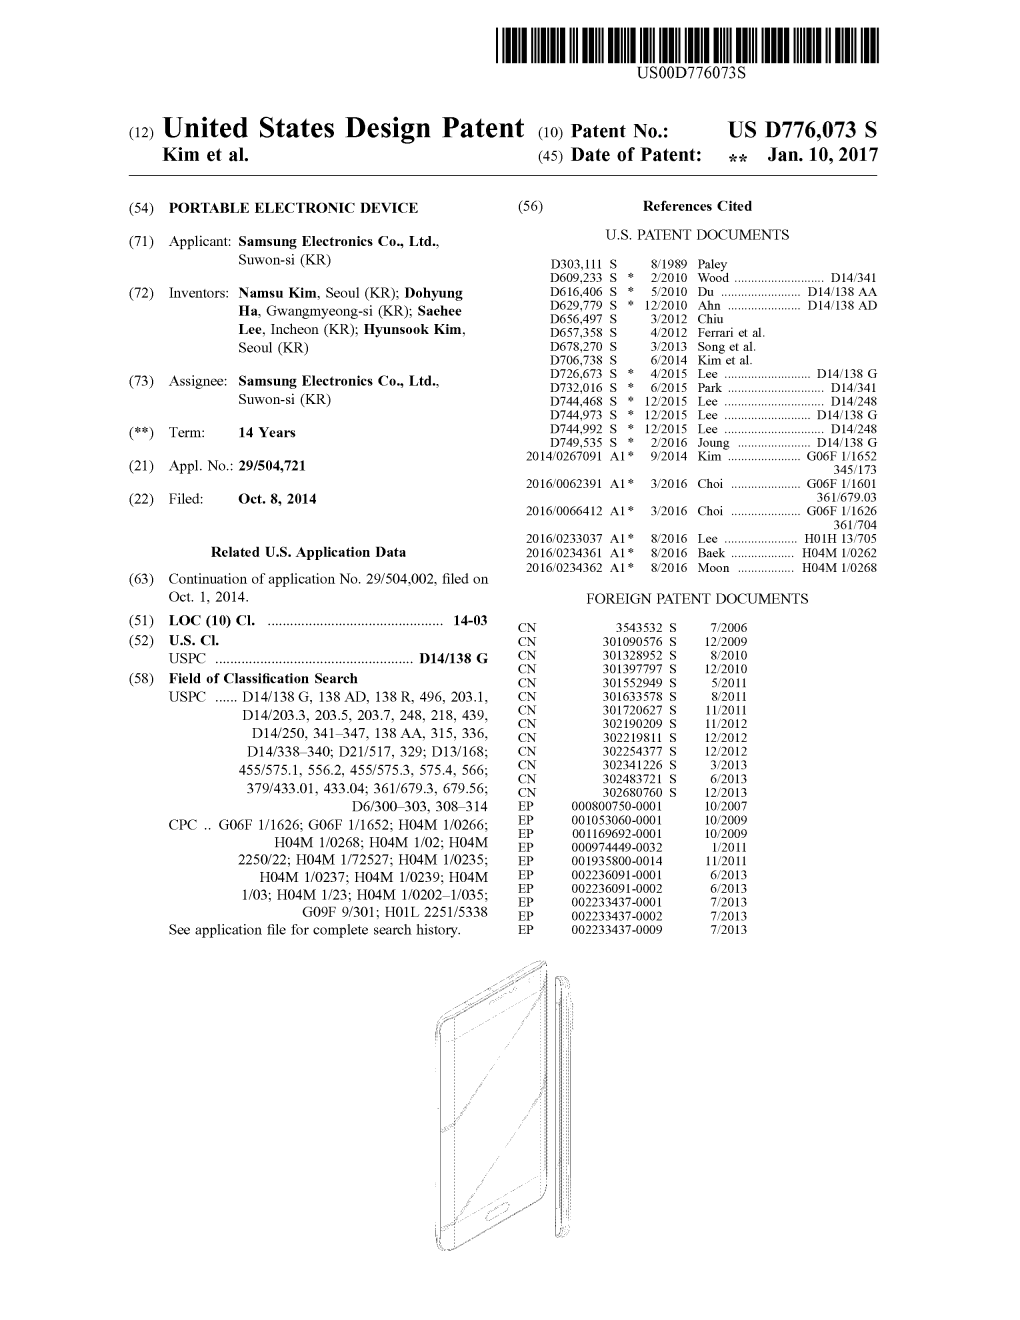 (12) United States Design Patent (10) Patent No.: US D776,073S Kim Et Al